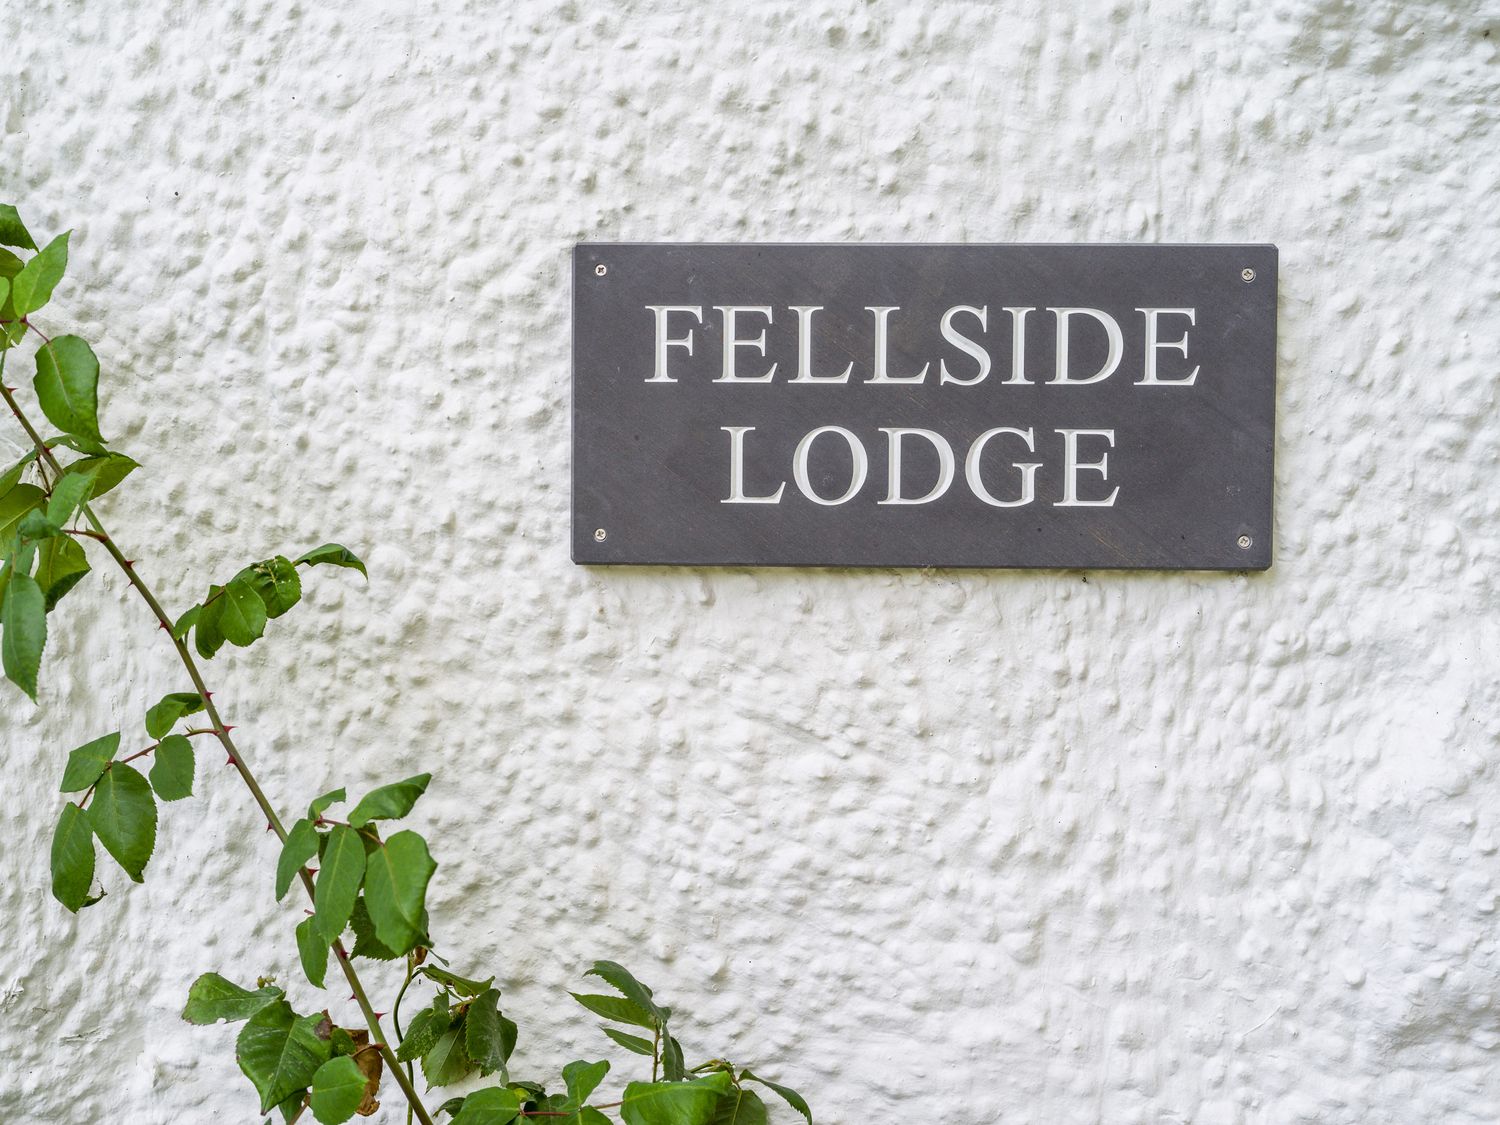 Fellside Lodge, Bowness-On-Windermere